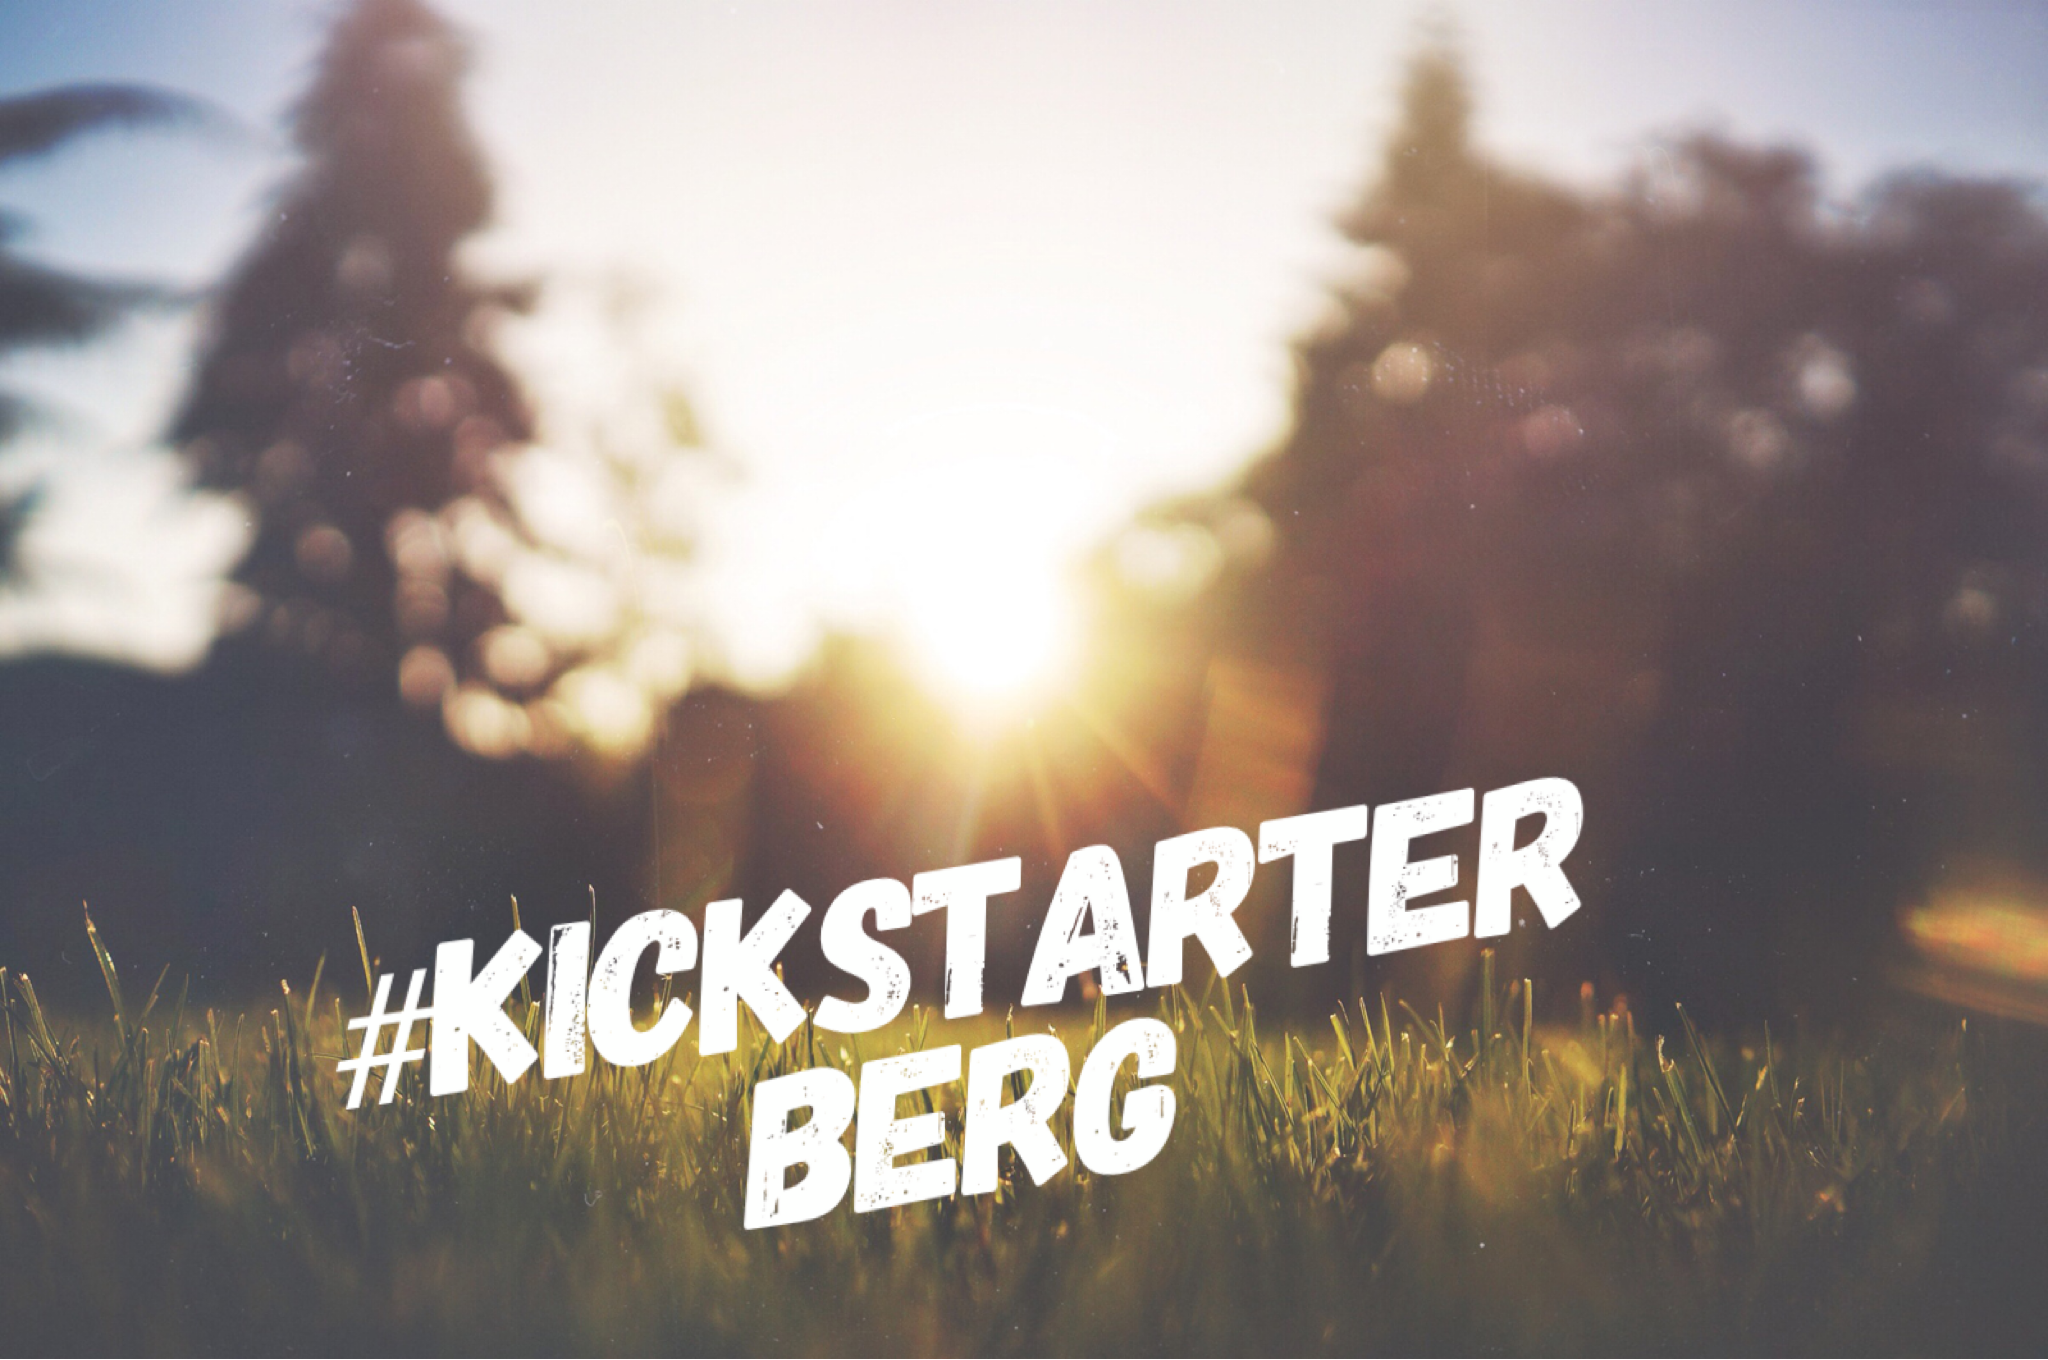 Kickstarter Berg